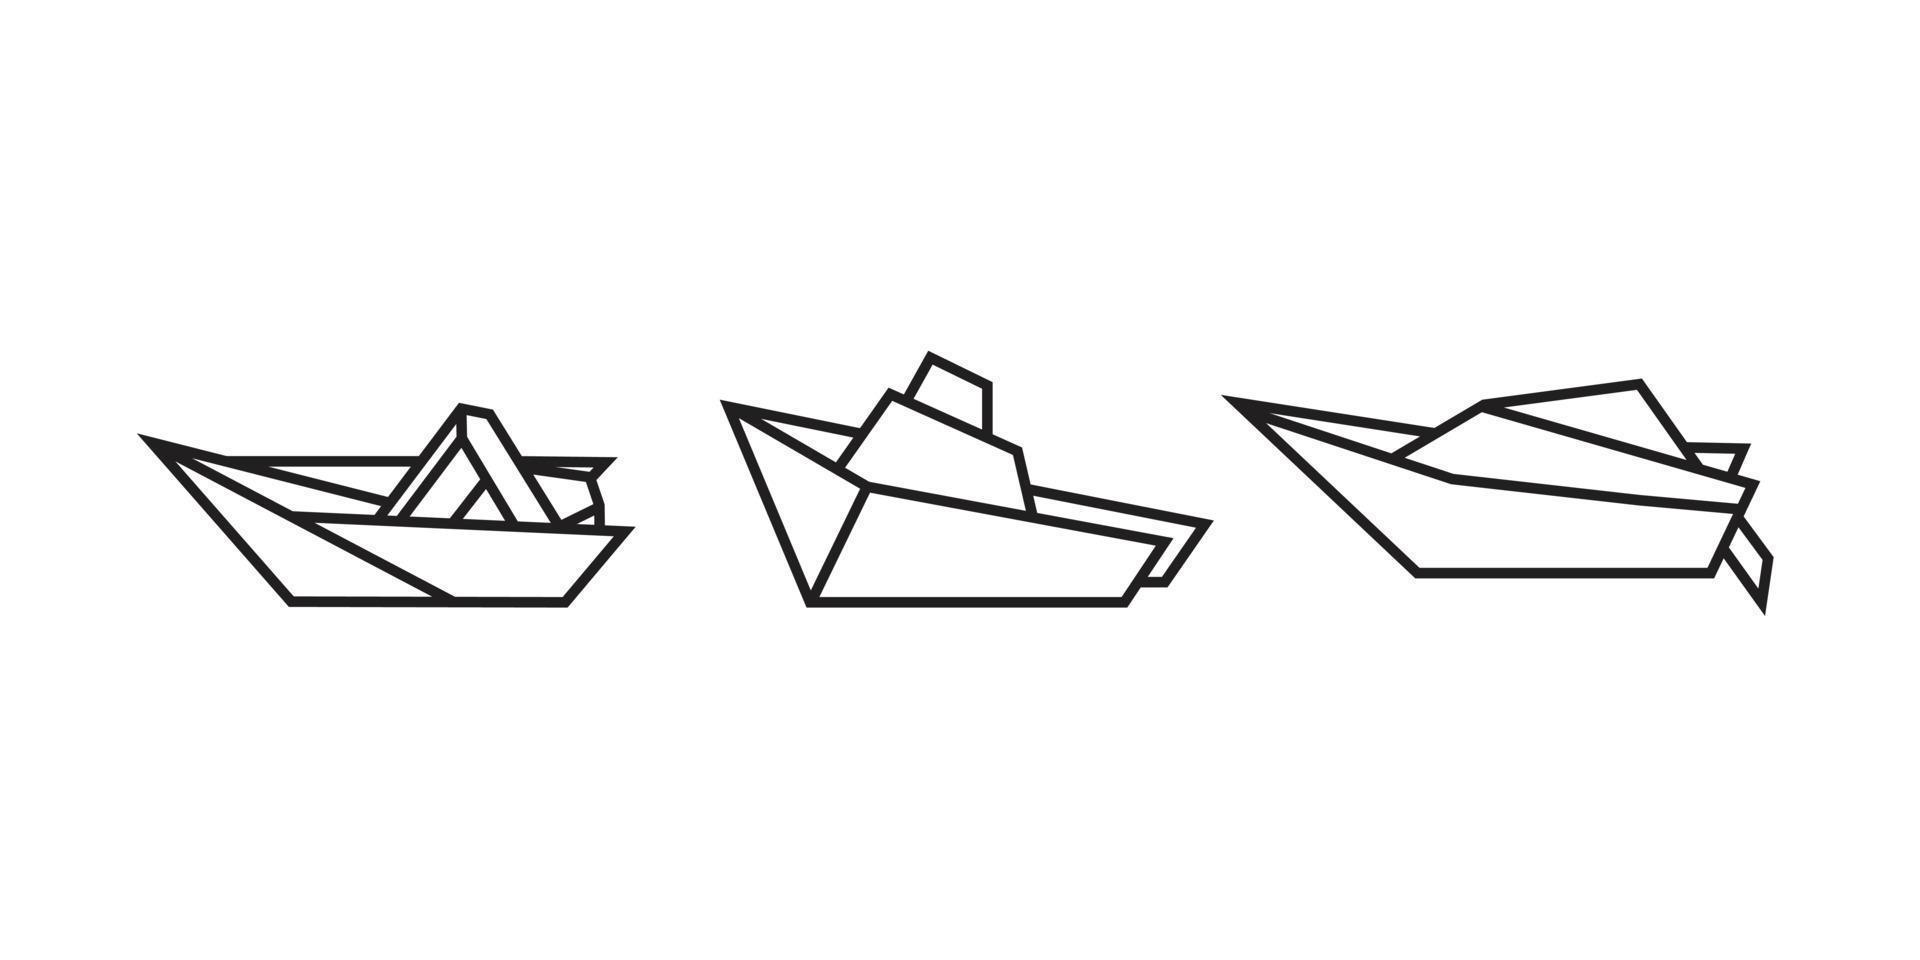 båt illustrationer i origami stil vektor